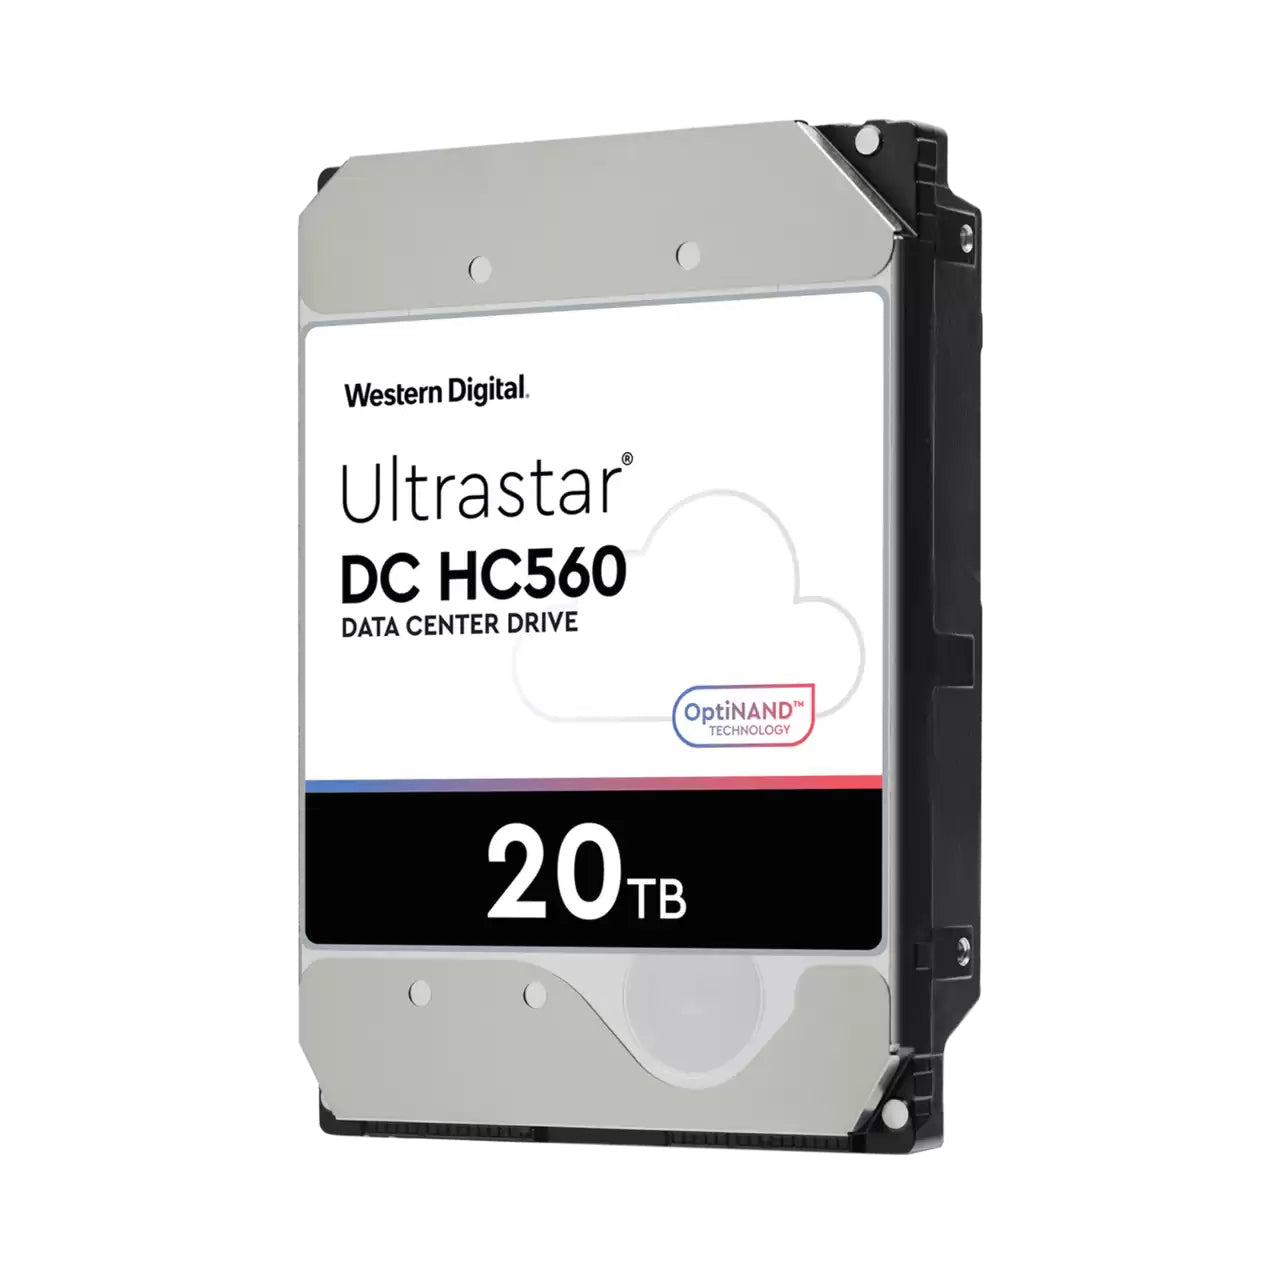 HDD WD Ultrastar DC HC560 WUH722020BLE6L4  20 TB - 7200 RPM